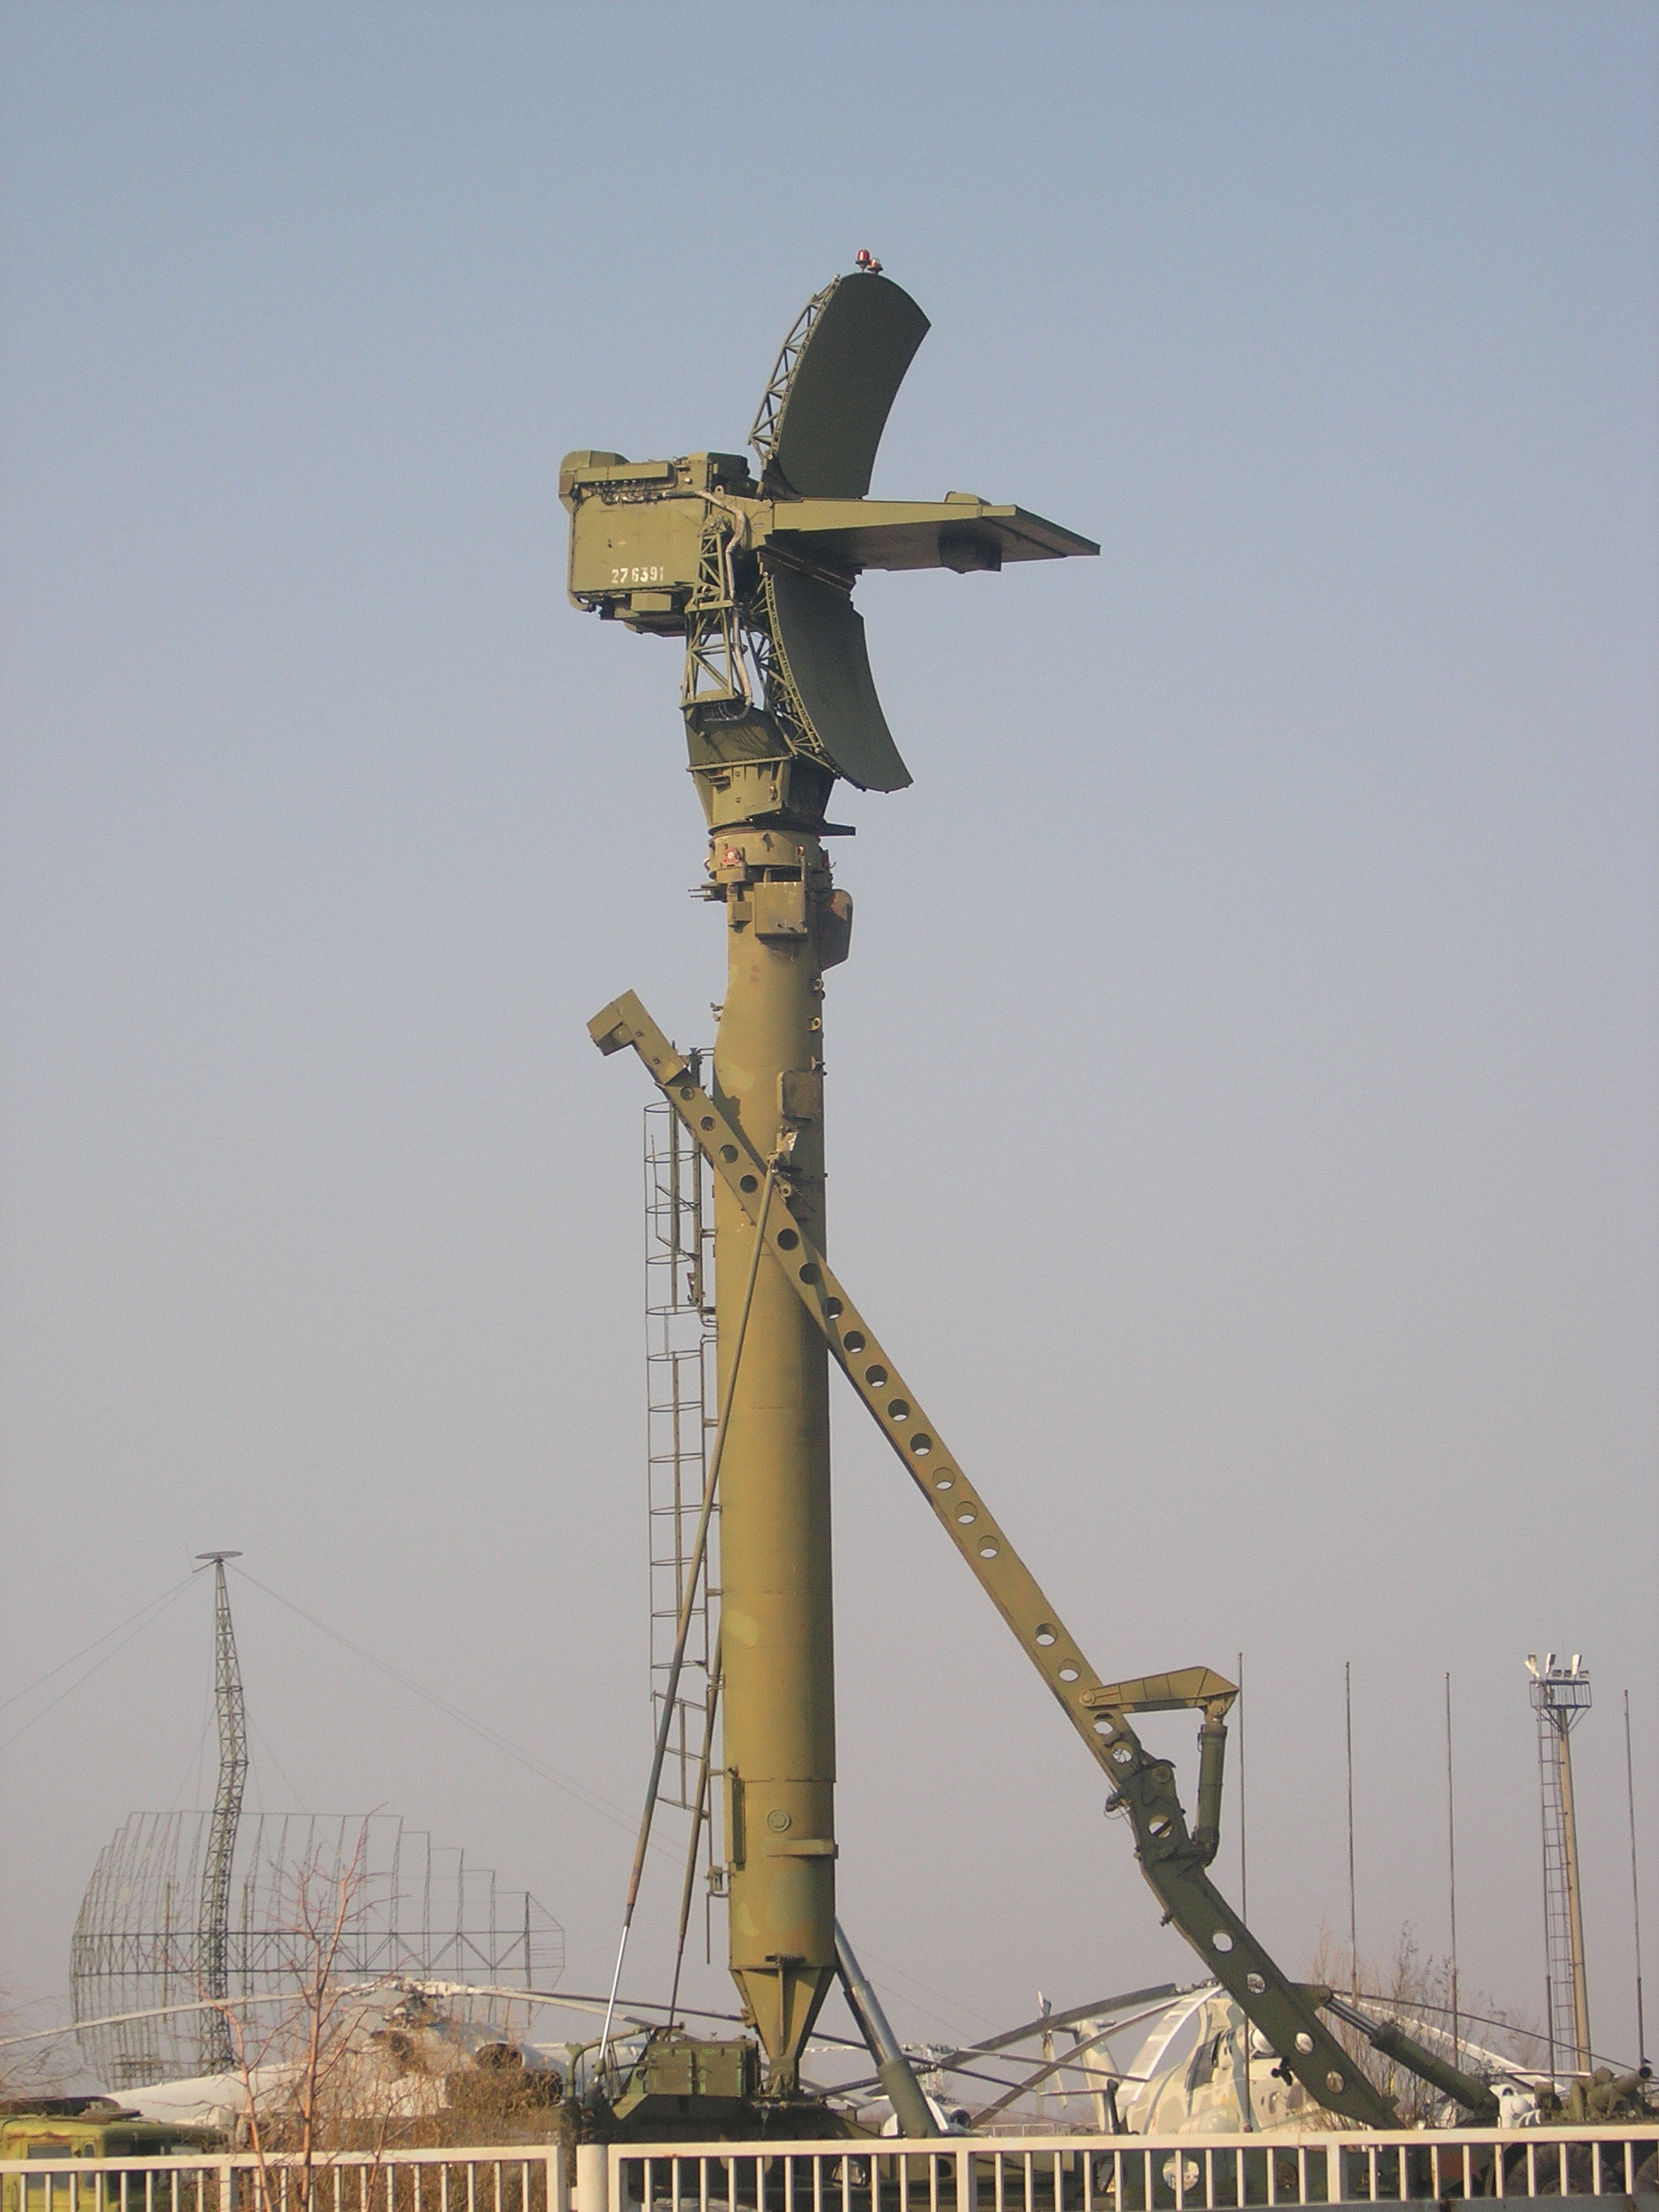 File:76N6 Clam Shell FMCW acquisition radar-1.JPG - Wikipedia